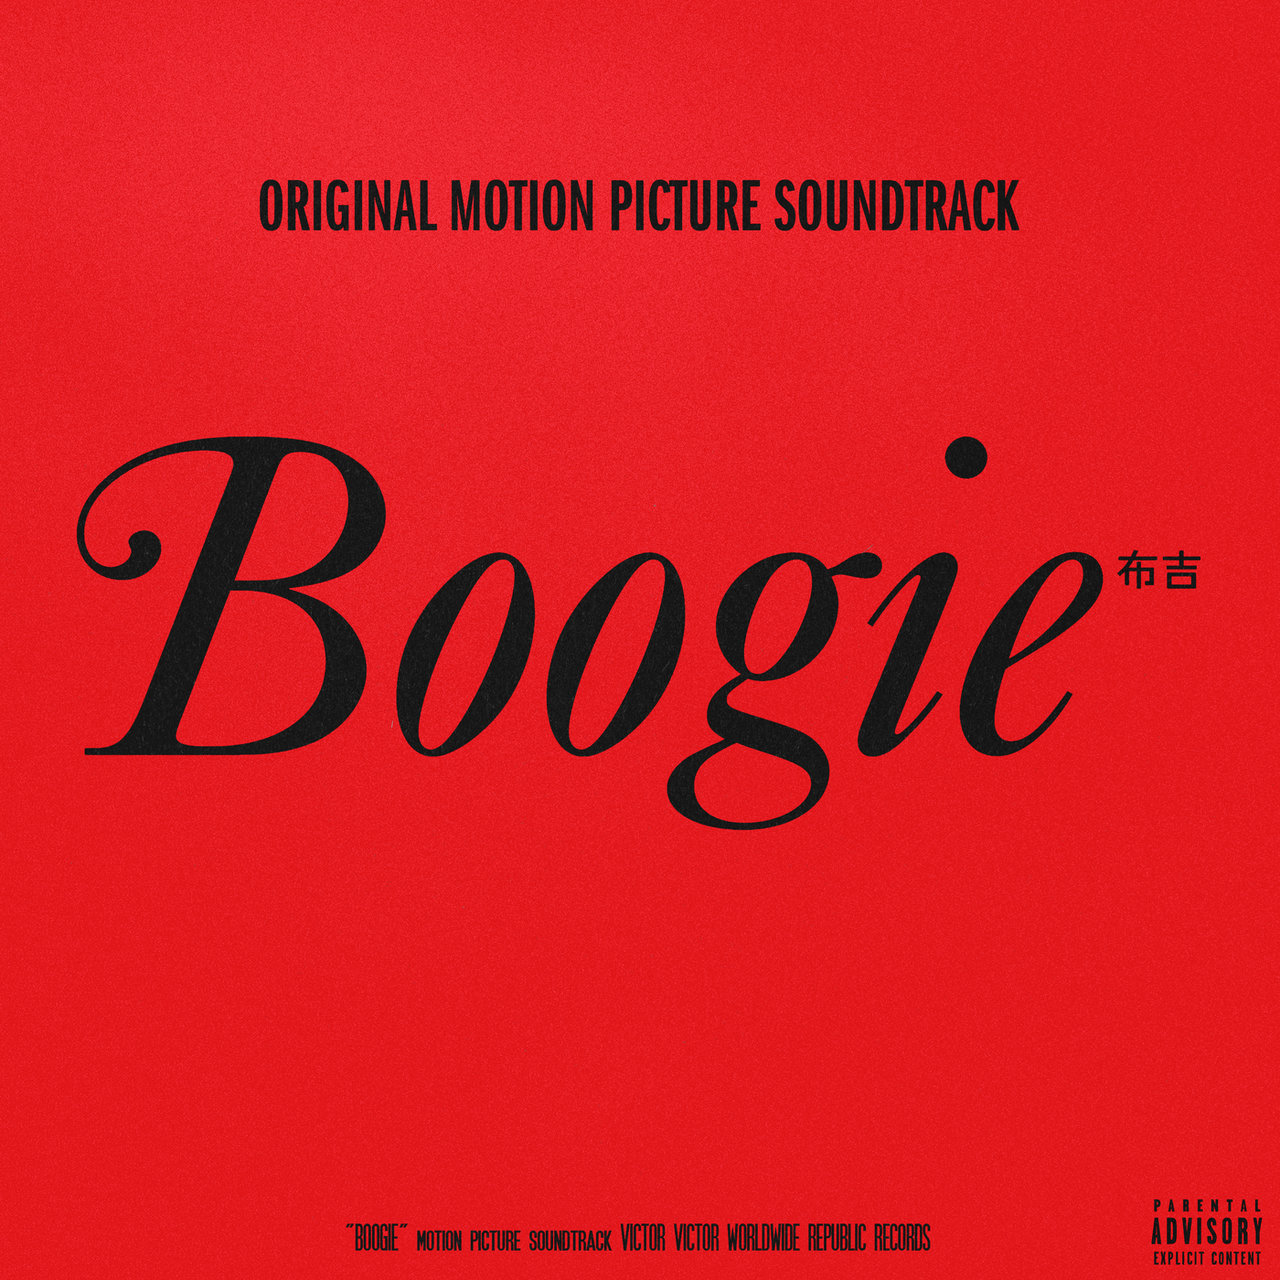 New Album: Various Artists 'Boogie: Original Motion Picture Soundtrack